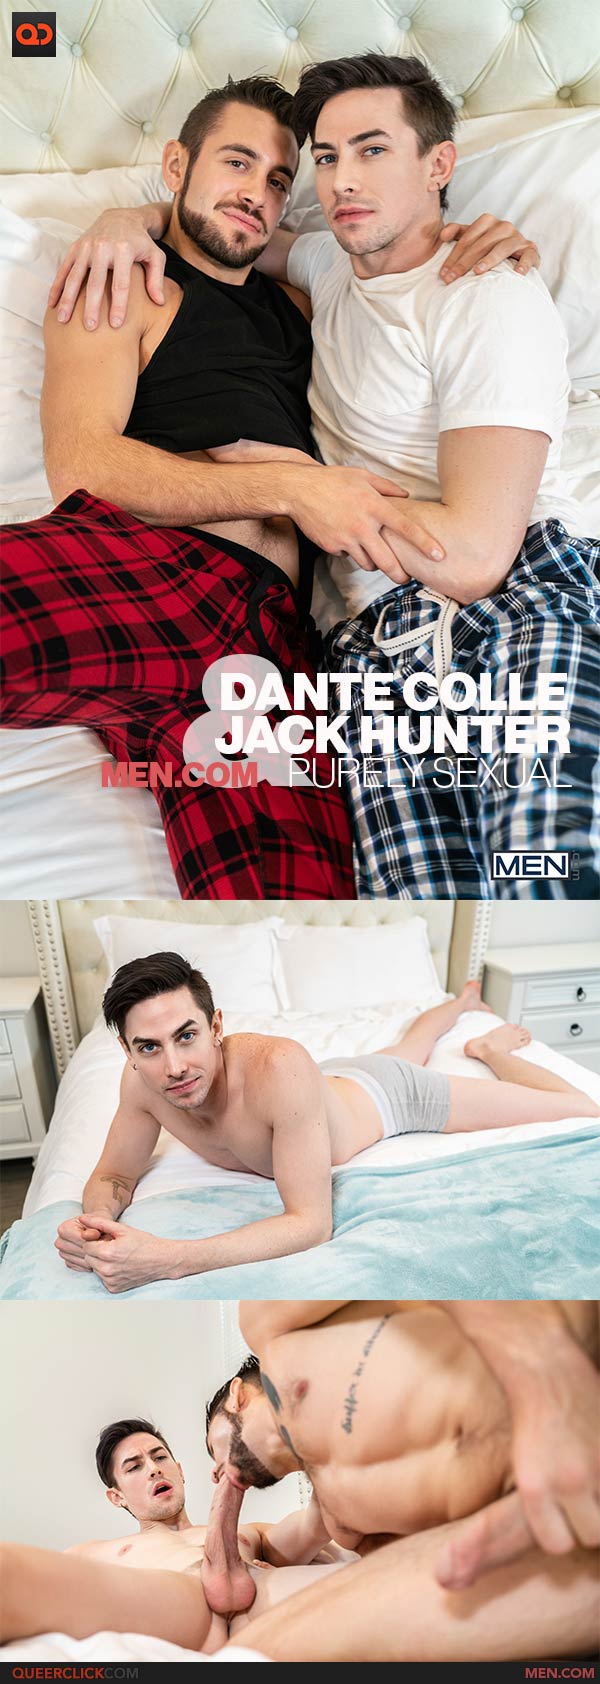 Men.com: Dante Colle and Jack Hunter